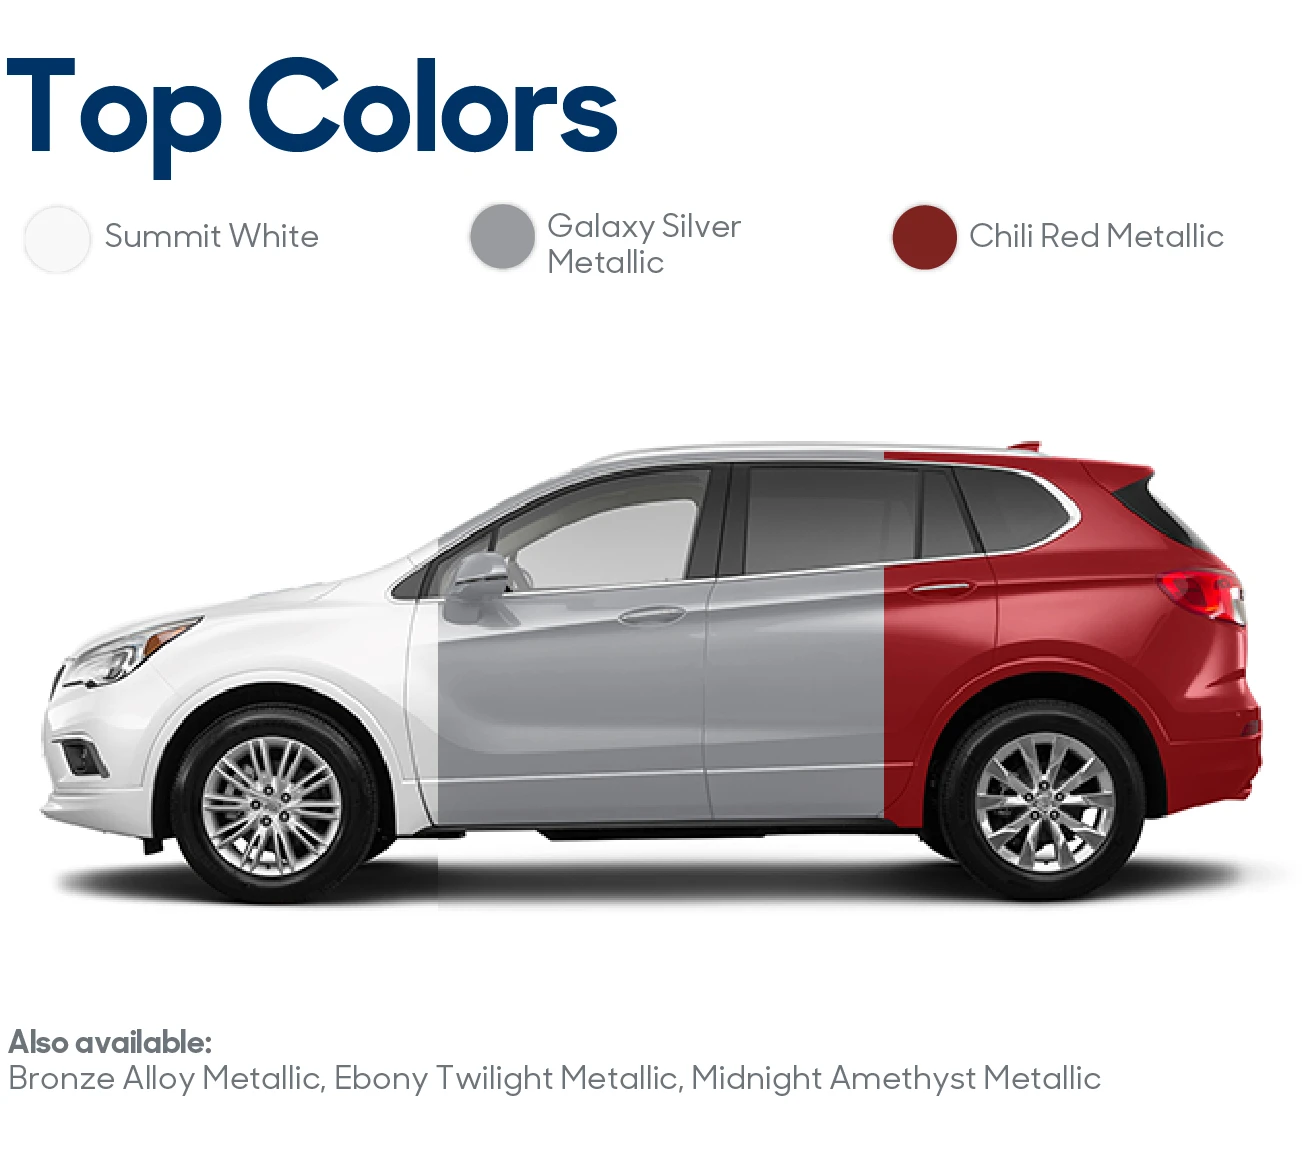 2017 Buick Envision Review: Top Colors | CarMax